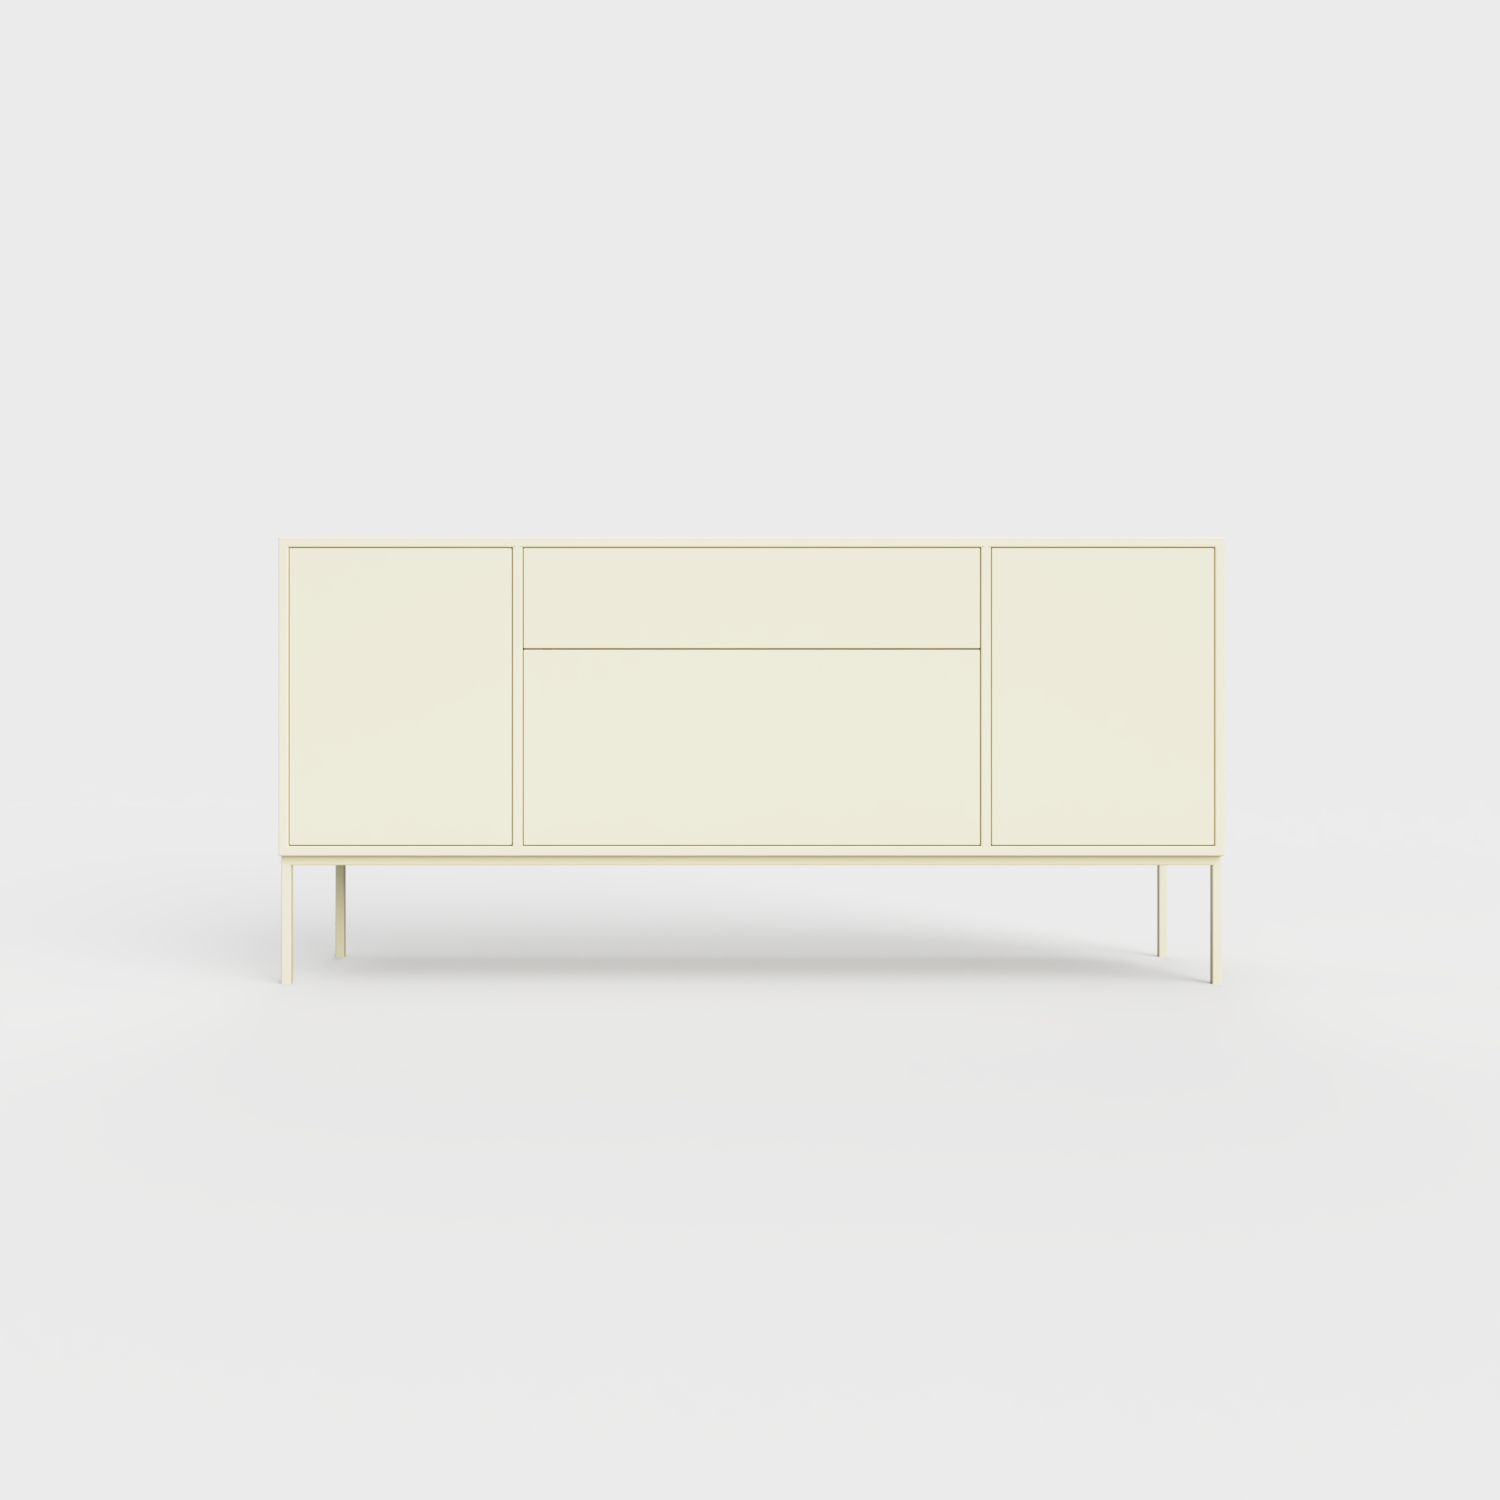 Arnika 02 Sideboard in Light Ecru color, powder-coated steel, elegant and modern piece of furniture for your living room